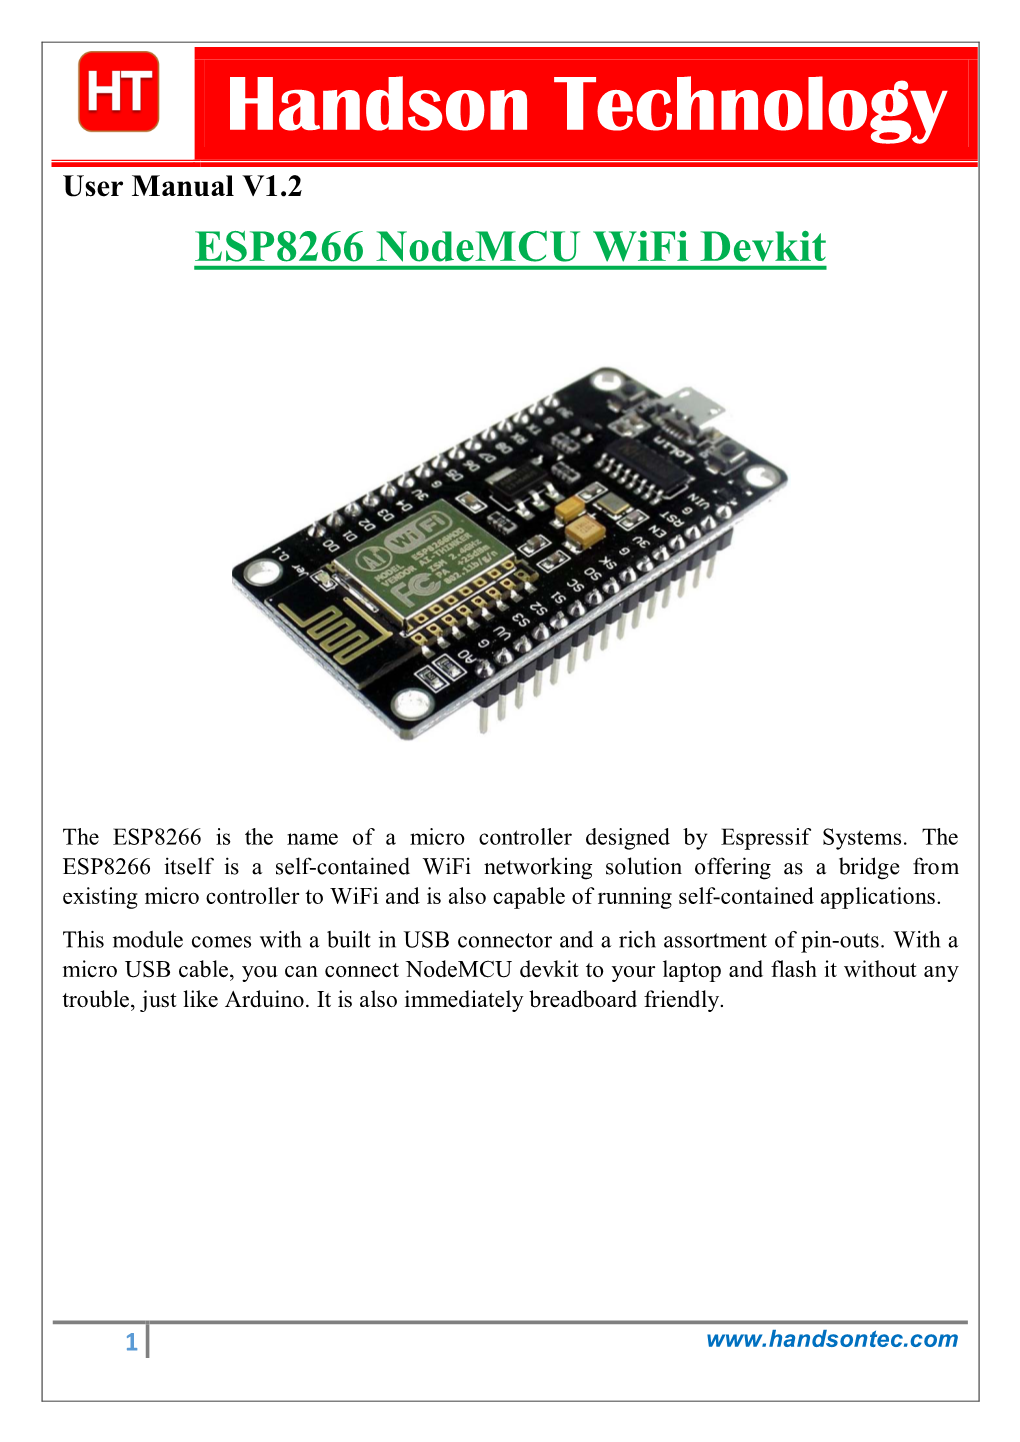 Handson Technology User Manual V1.2 ESP8266 Nodemcu Wifi Devkit